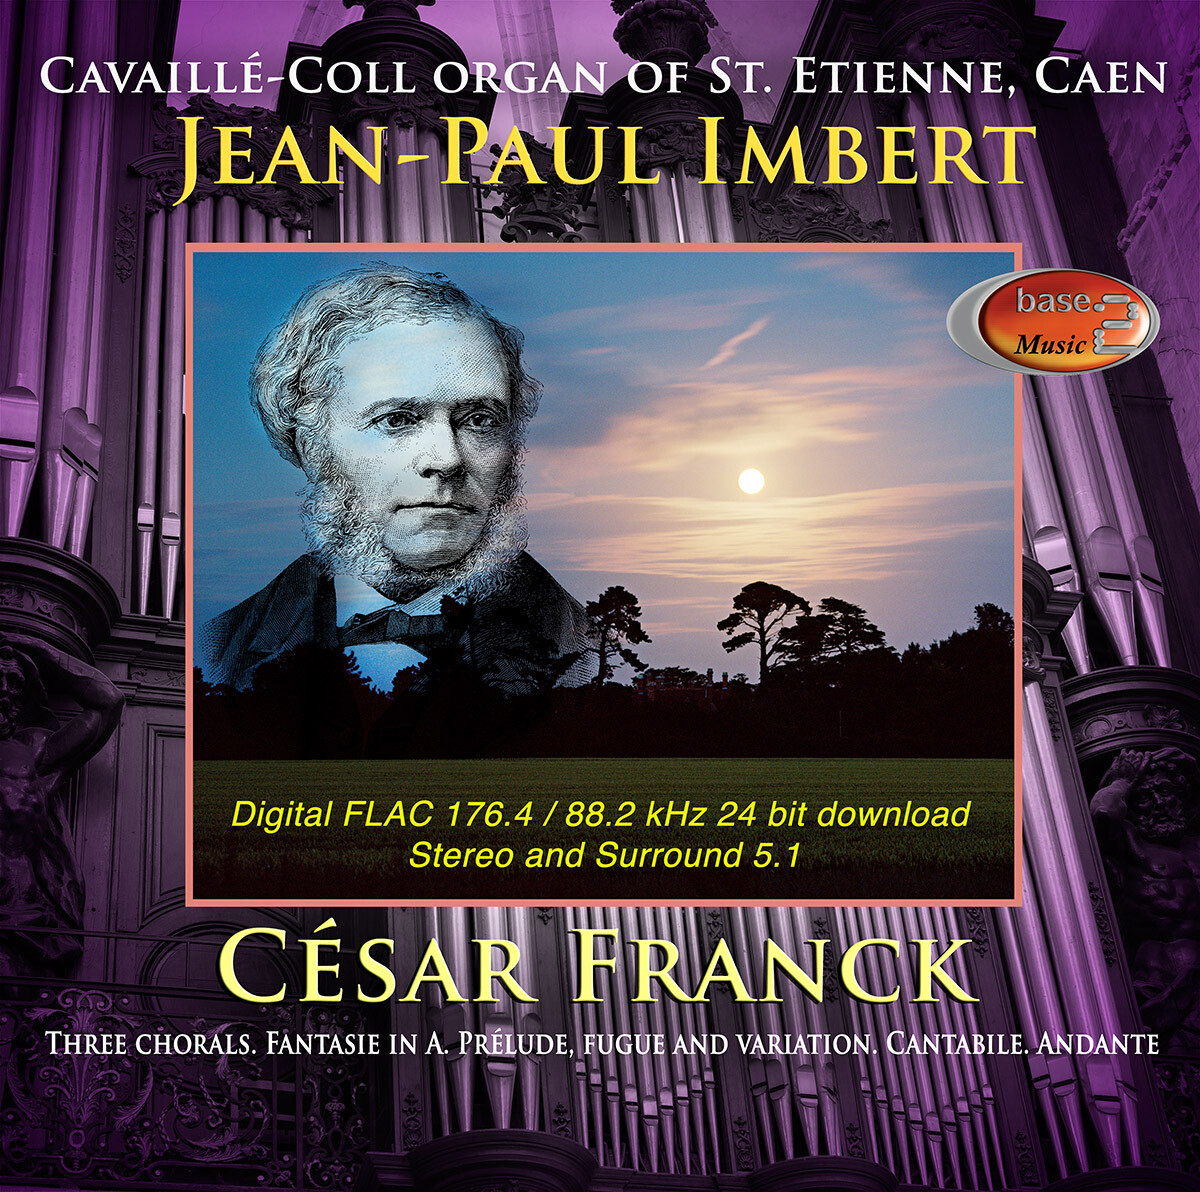 Cesar Franck organ works by Jean-Paul Imbert - FLAC digital download 176.4  Khz 88.2 kHz 24 bit and 5.1 Surround